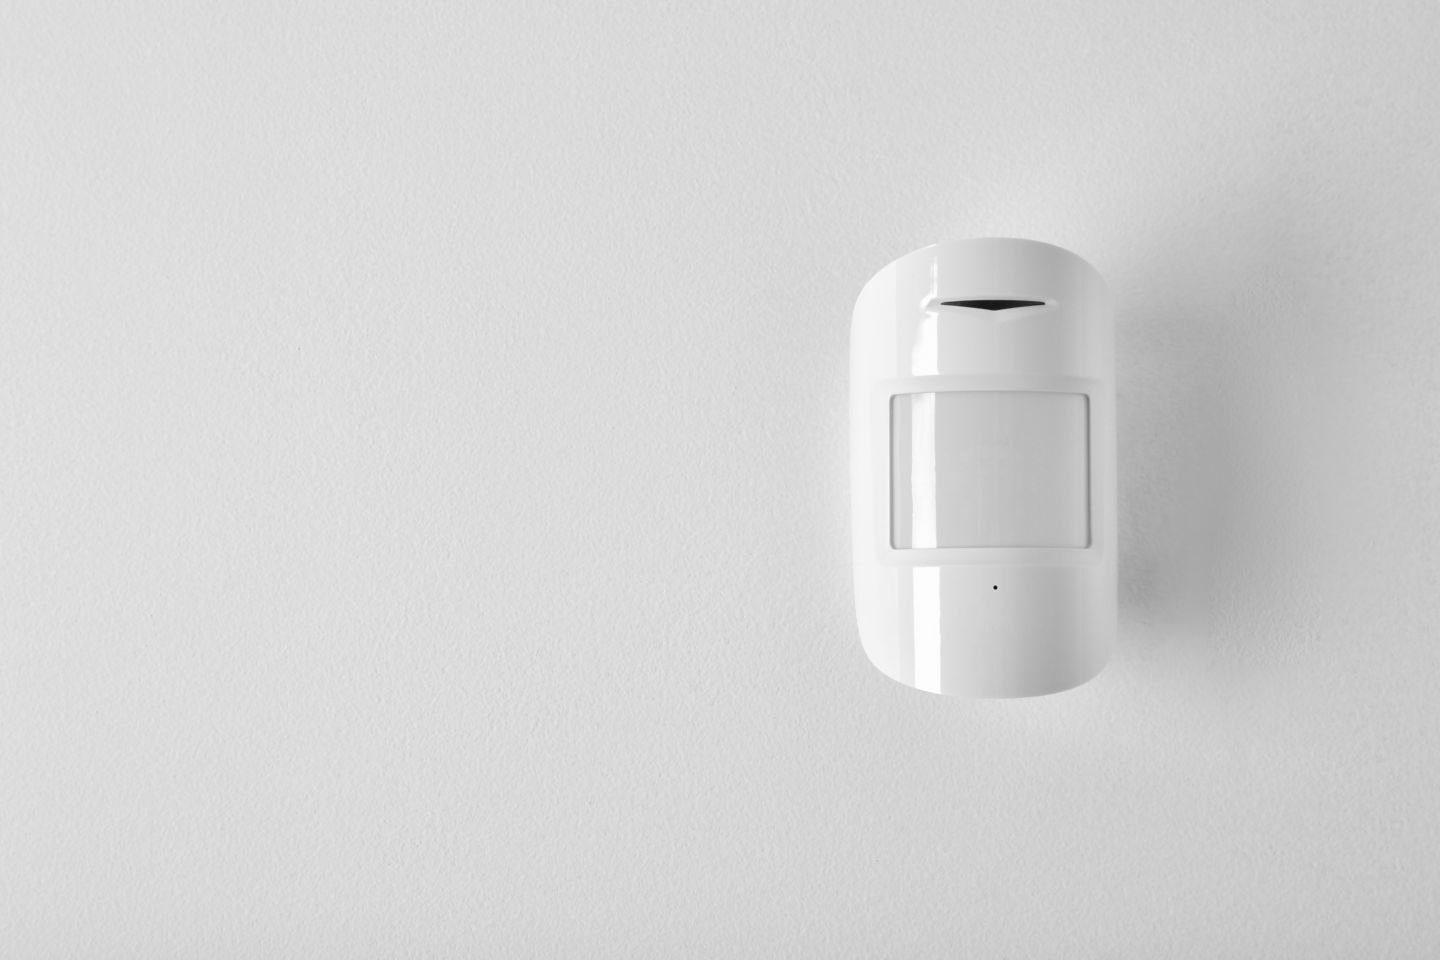 Modern motion sensor on wall indoors